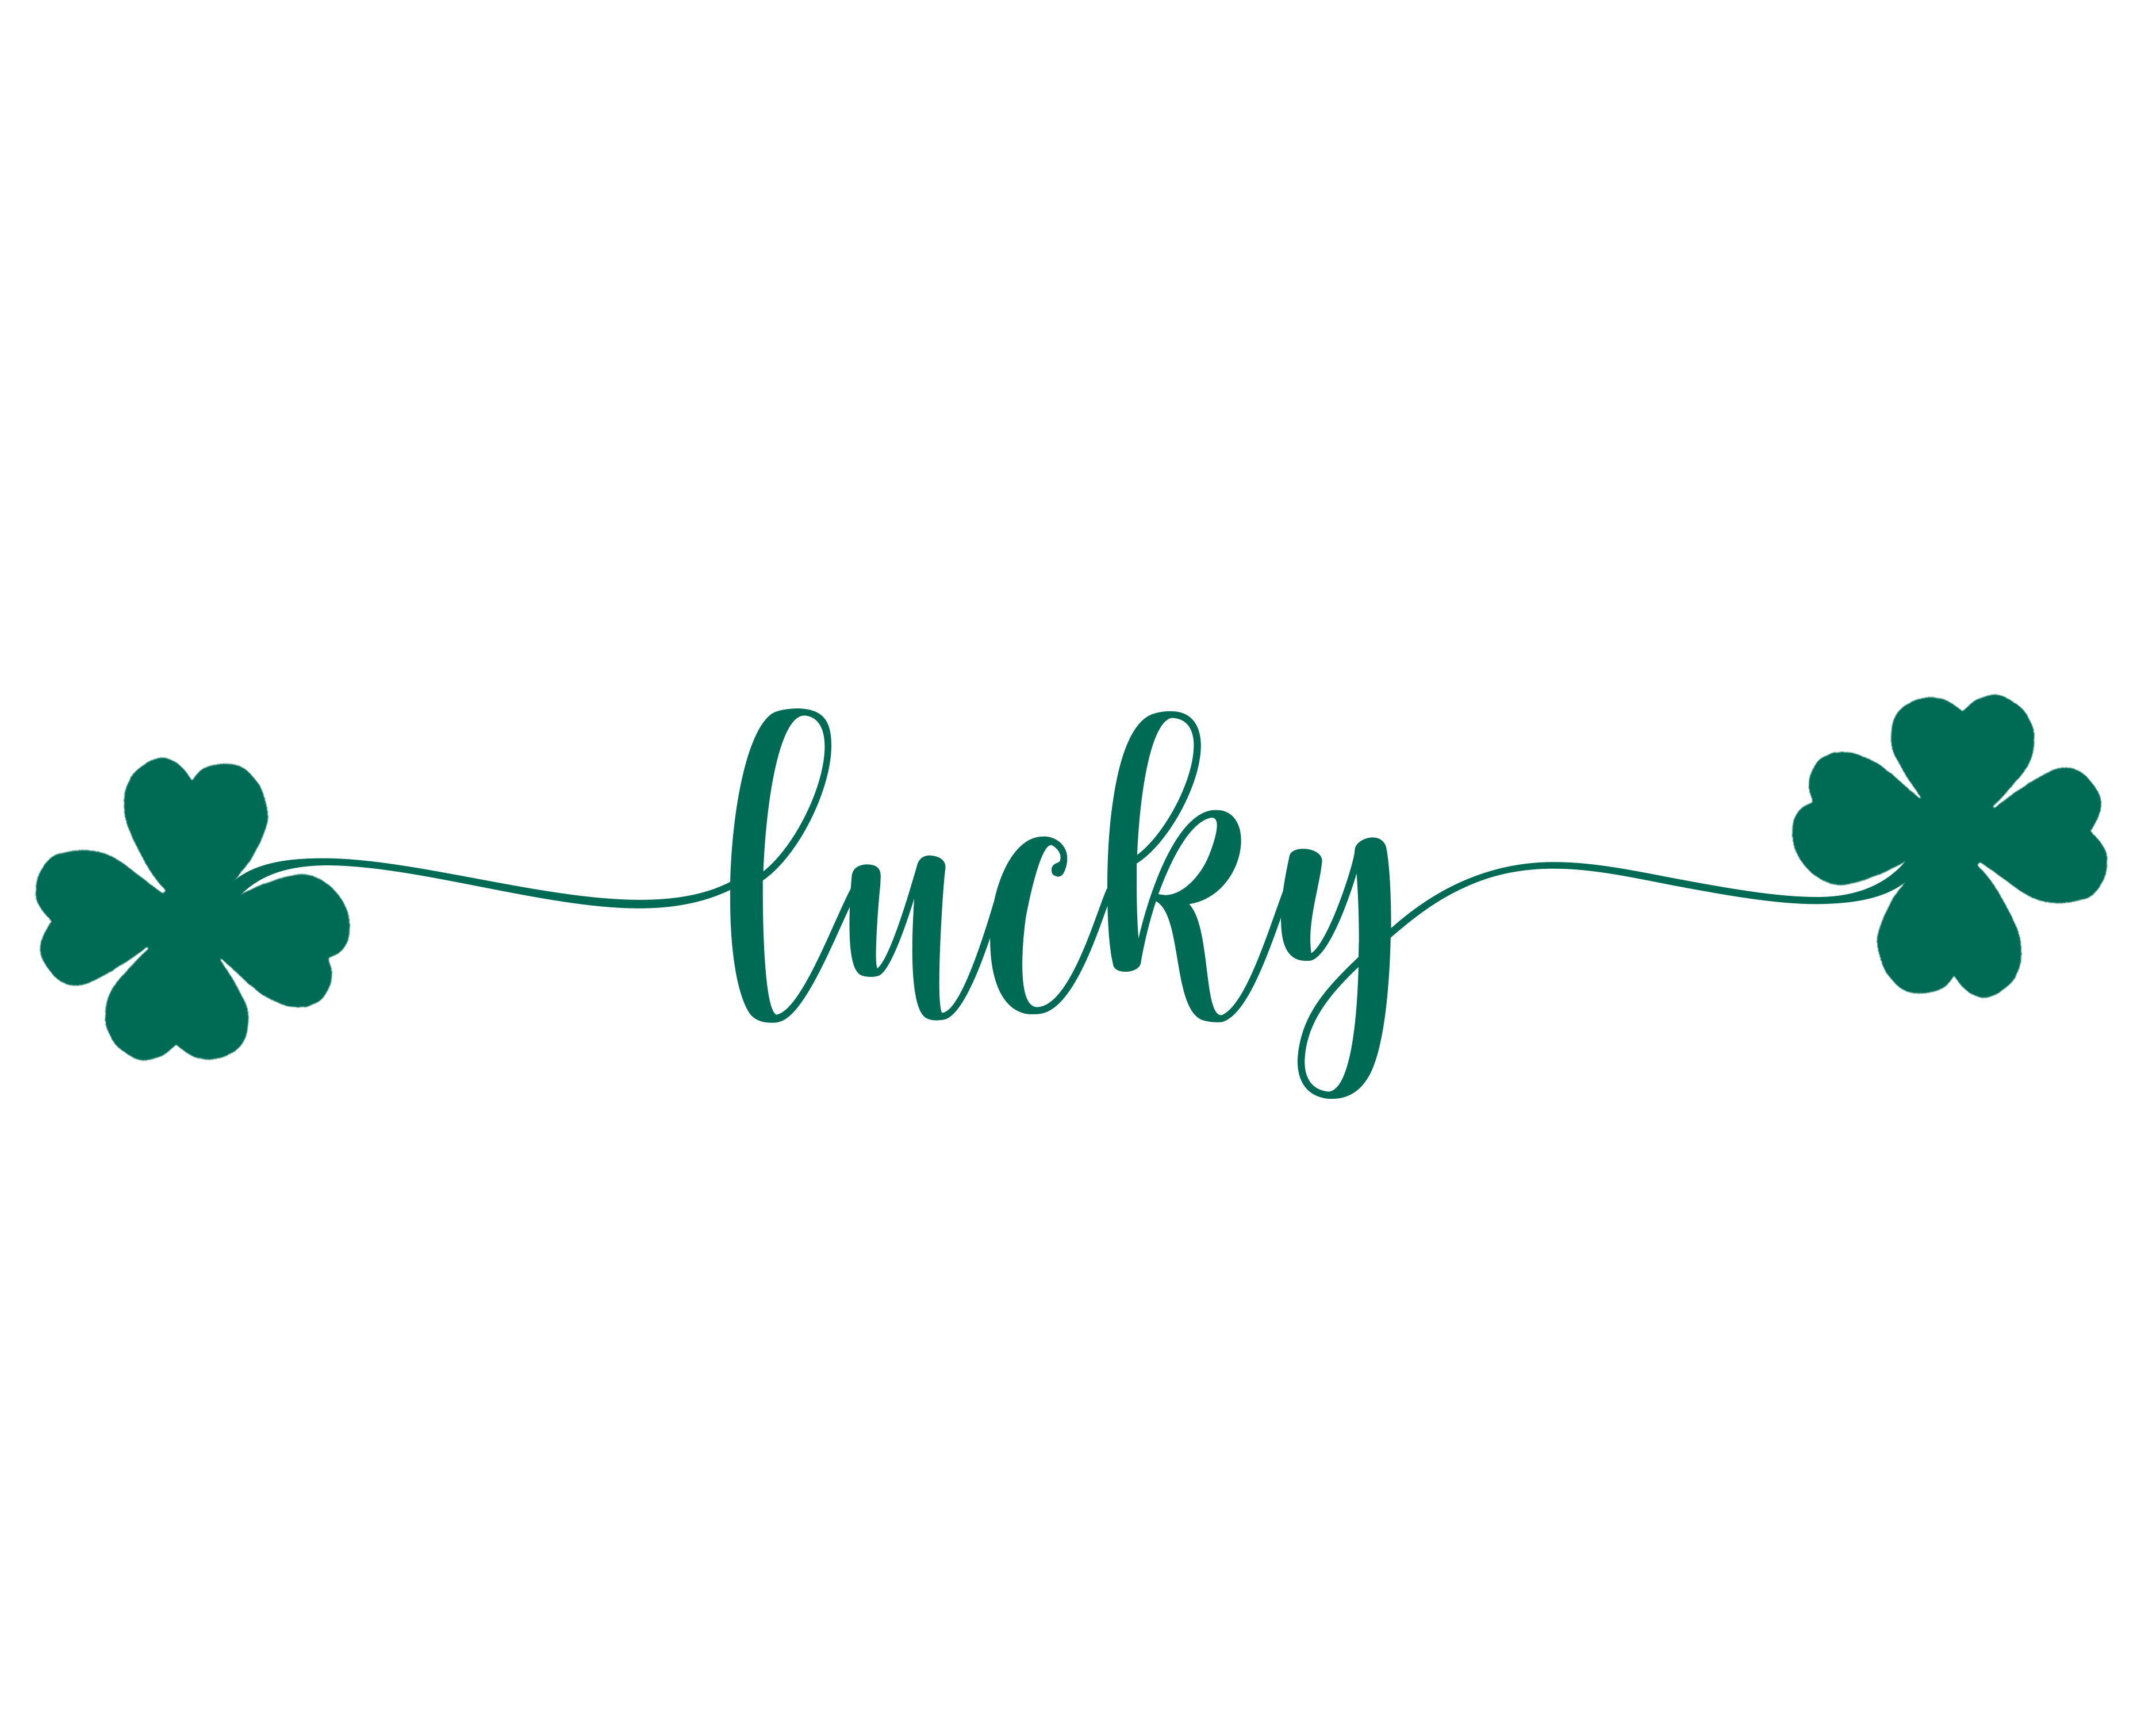 Lucky 13 Skull Happy St Patricks Day Skeleton Leprechaun Shamrock PNG Editable Printable